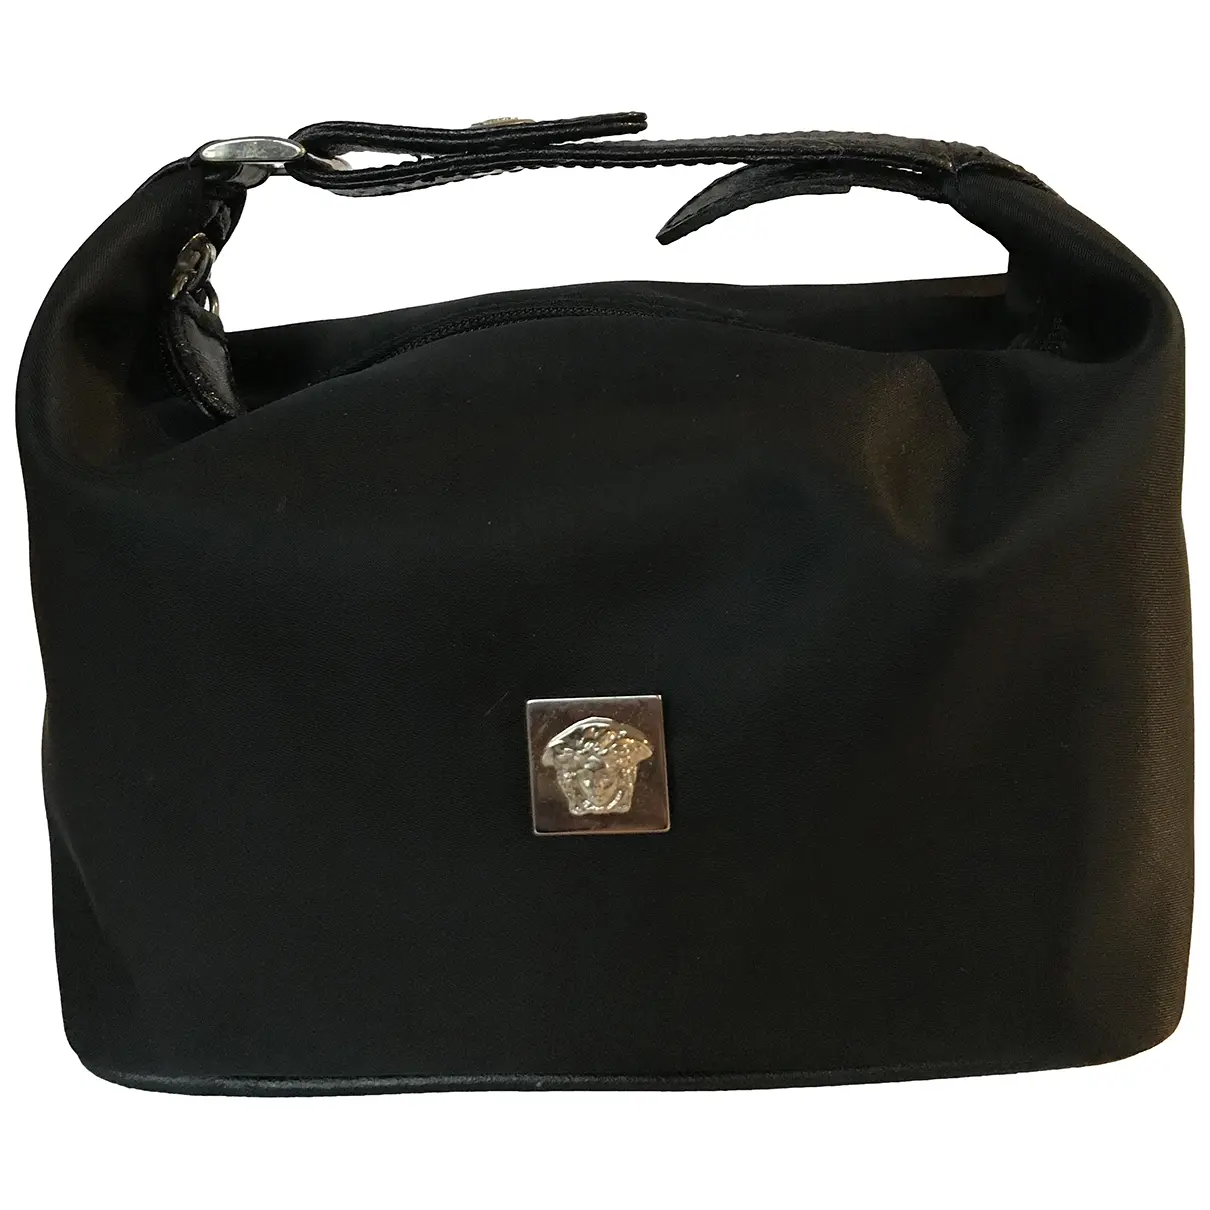 Handbag Gianni Versace